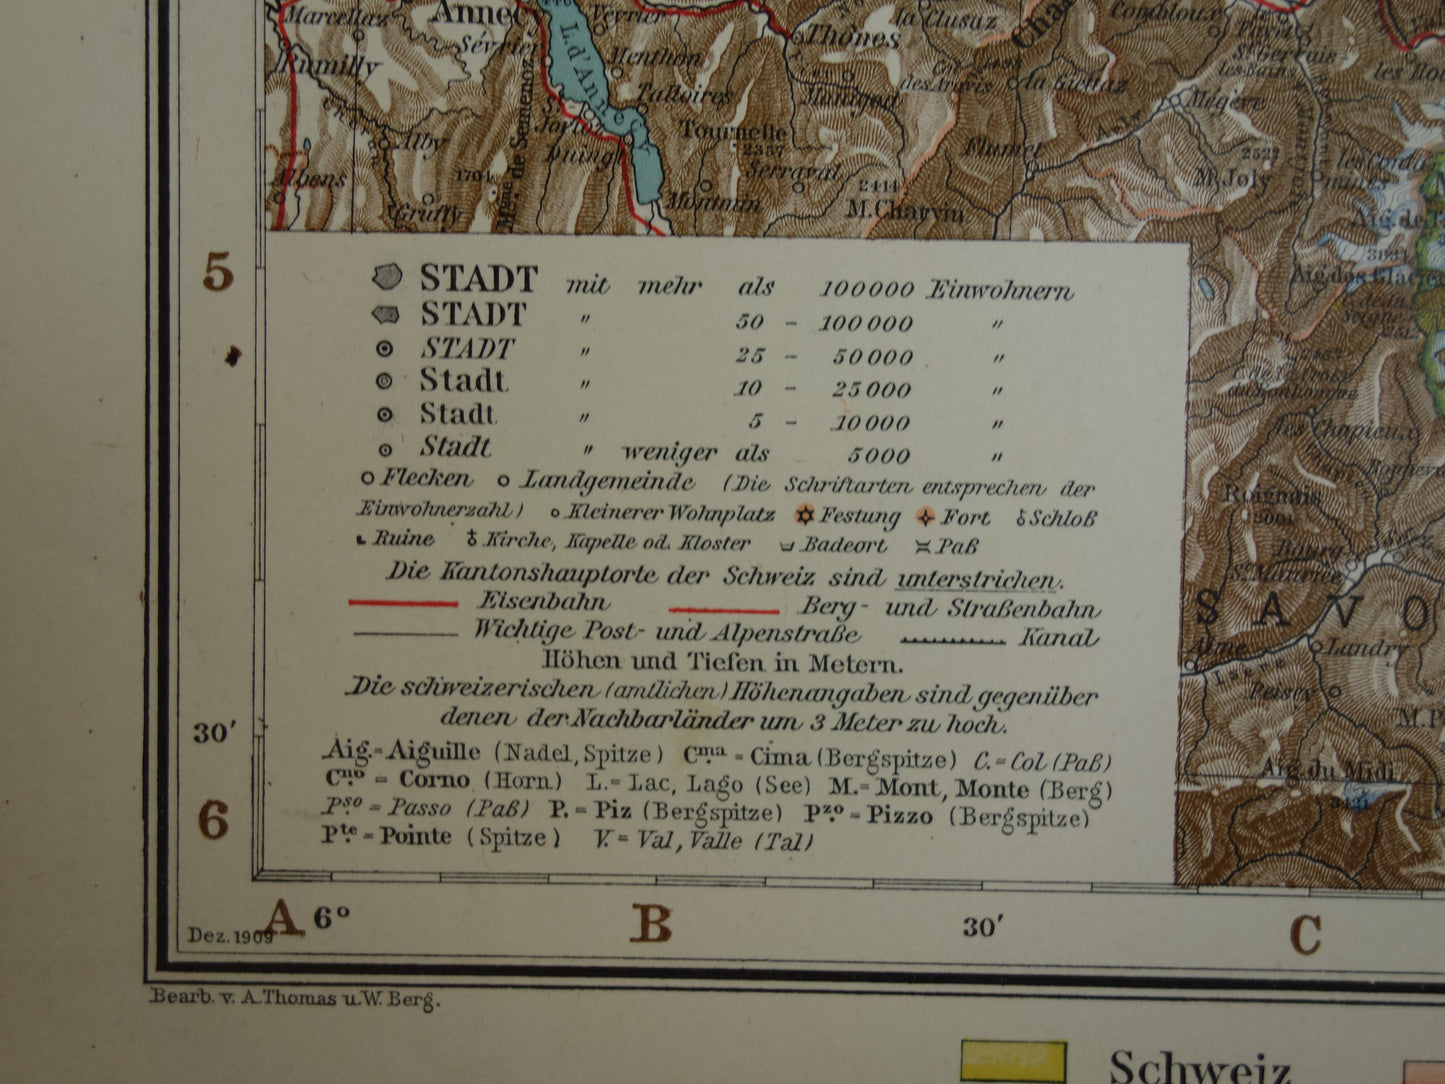 ZWITSERLAND Oude kaart van Zwitserland - Gedetailleerde grote landkaart met jaartal 1909 - Originele vintage kaarten